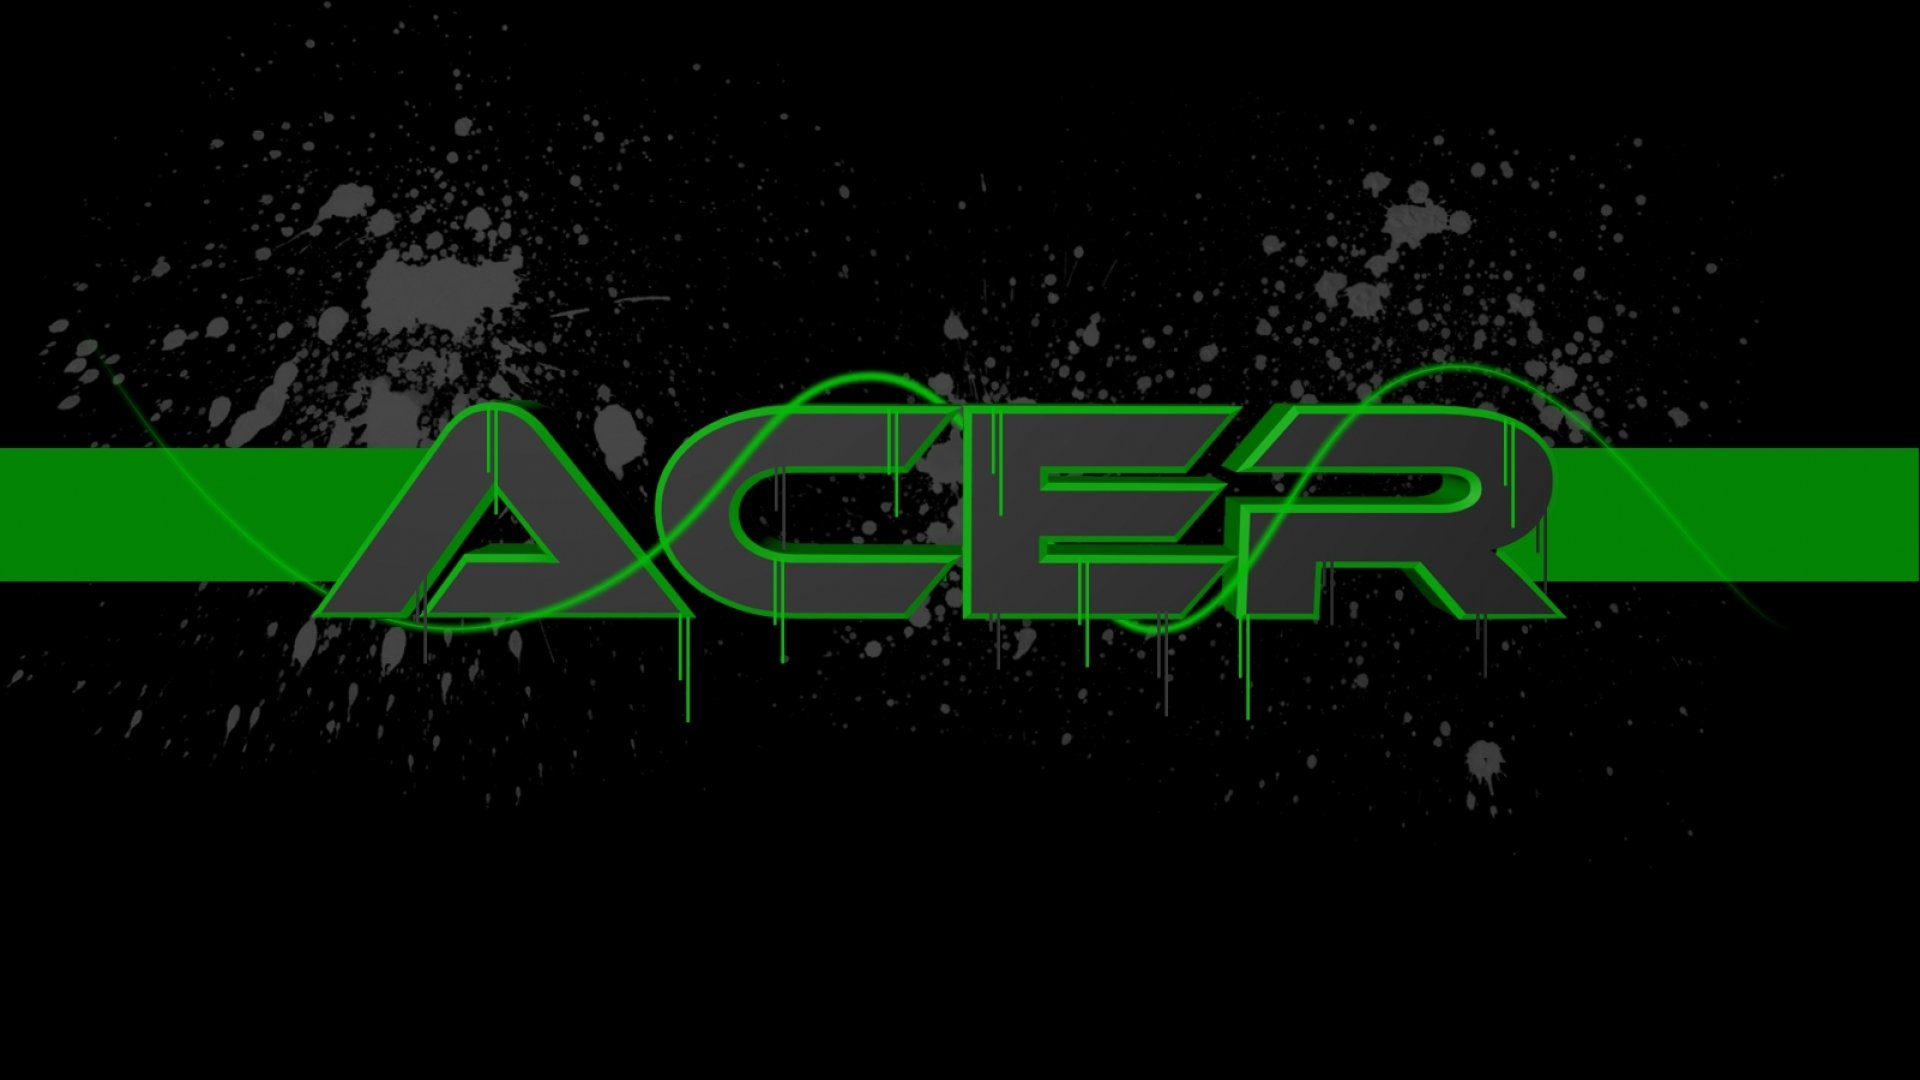 Acer Puter Wallpaper Background